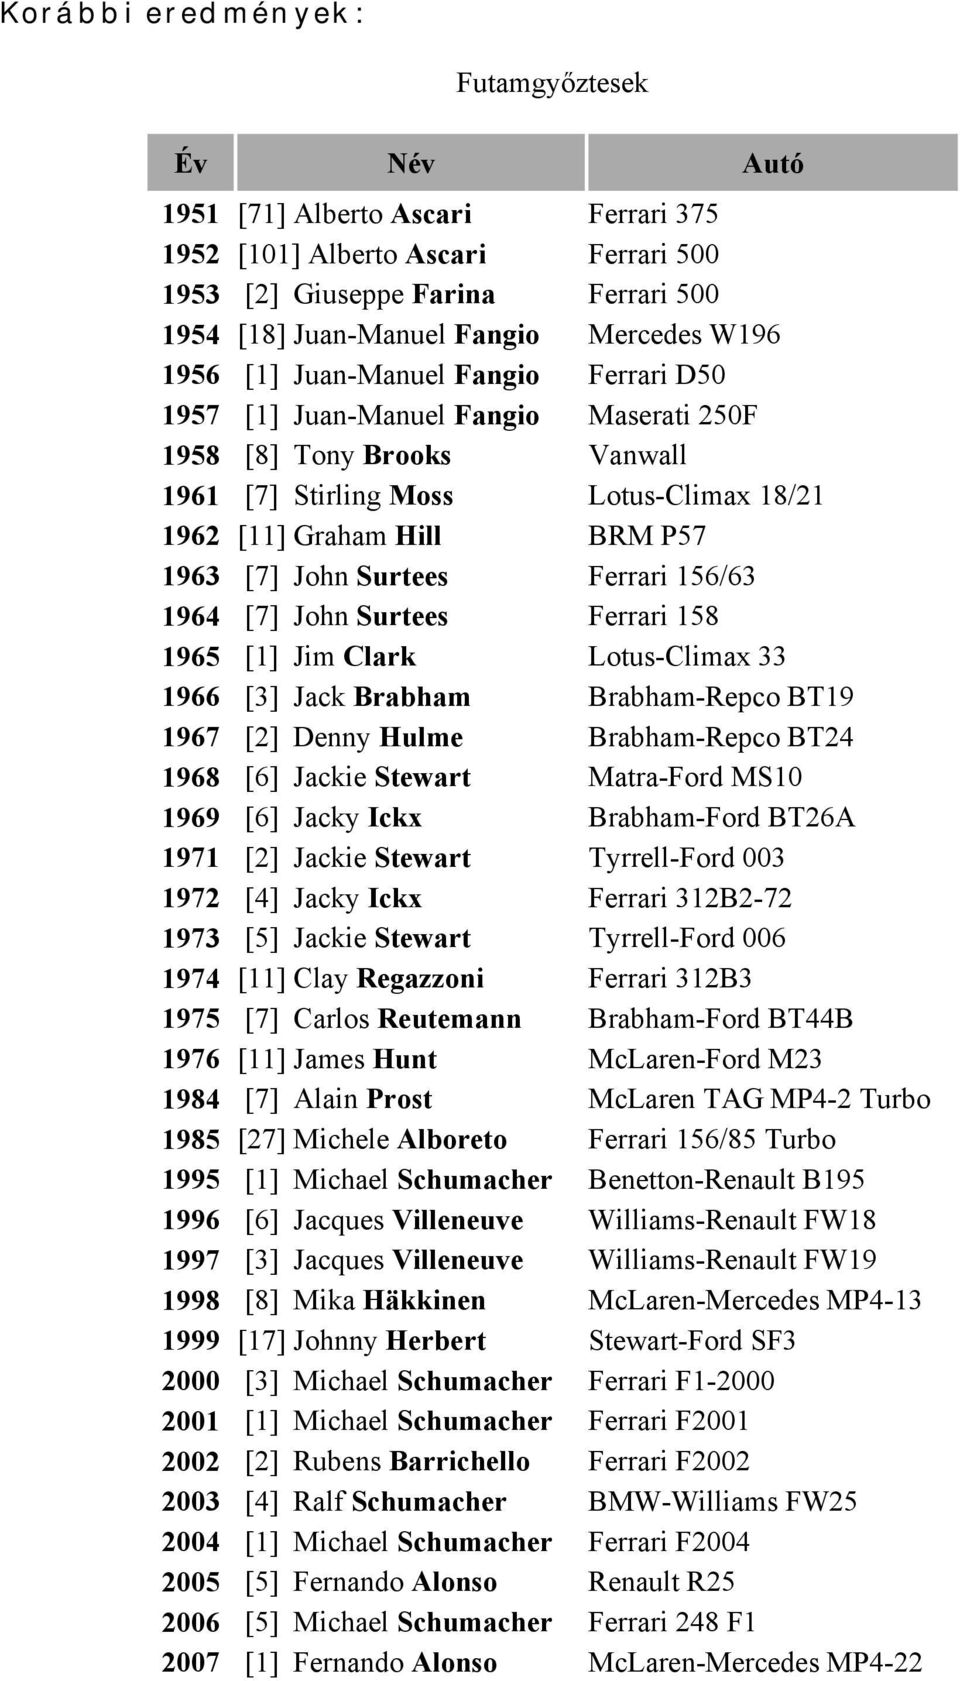 John Surtees Ferrari 156/63 1964 [7] John Surtees Ferrari 158 1965 [1] Jim Clark Lotus-Climax 33 1966 [3] Jack Brabham Brabham-Repco BT19 1967 [2] Denny Hulme Brabham-Repco BT24 1968 [6] Jackie